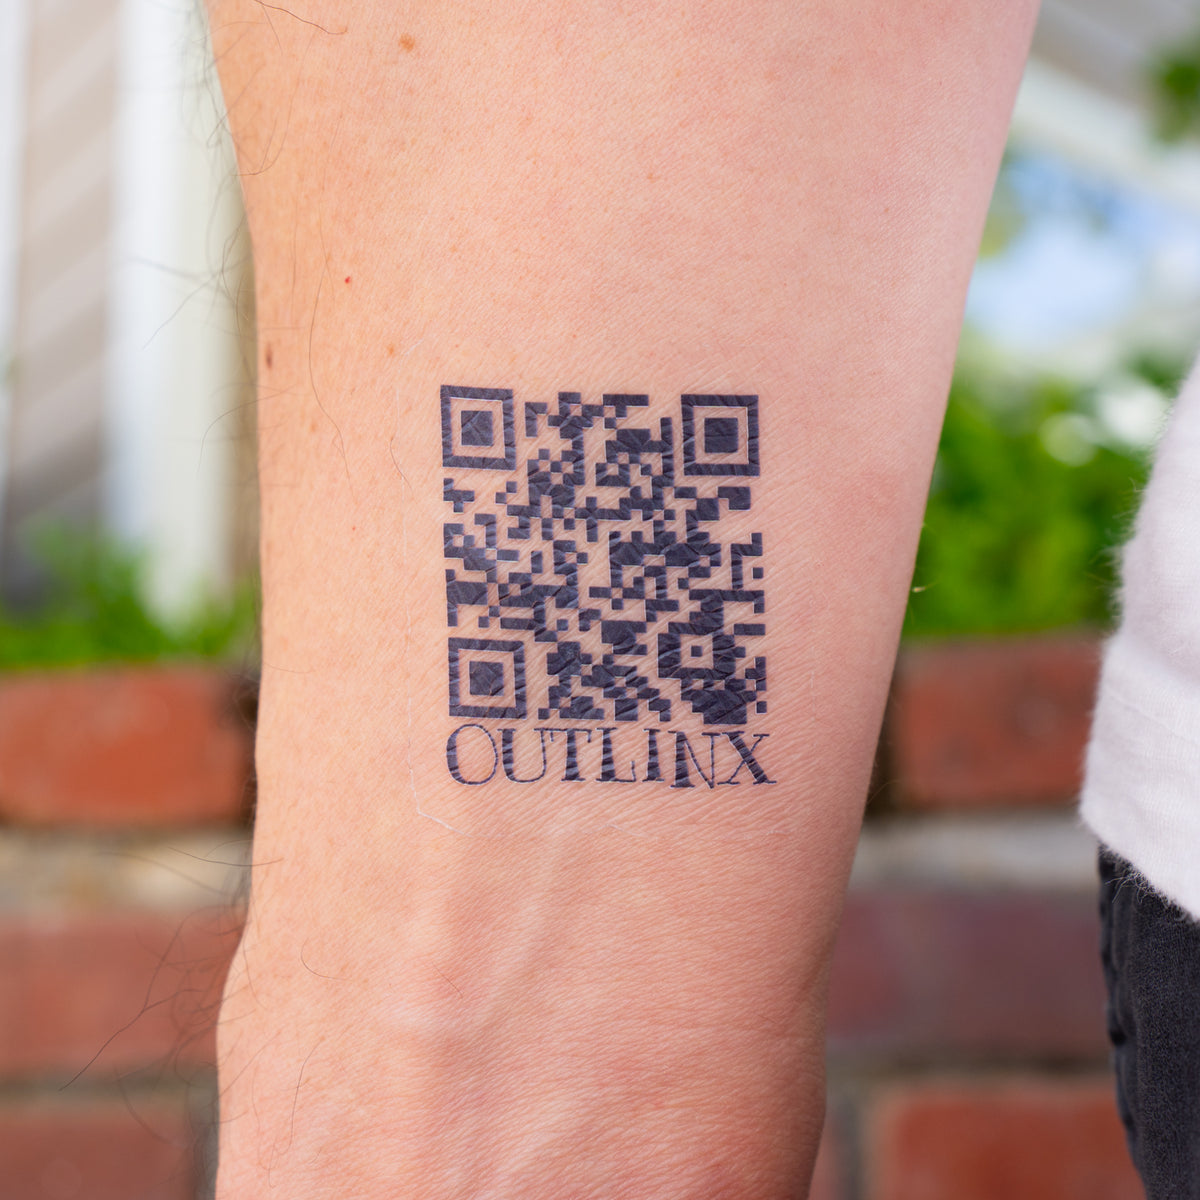 Outlinx QR Smart Tattoo Pack - Black, 4 tattoos